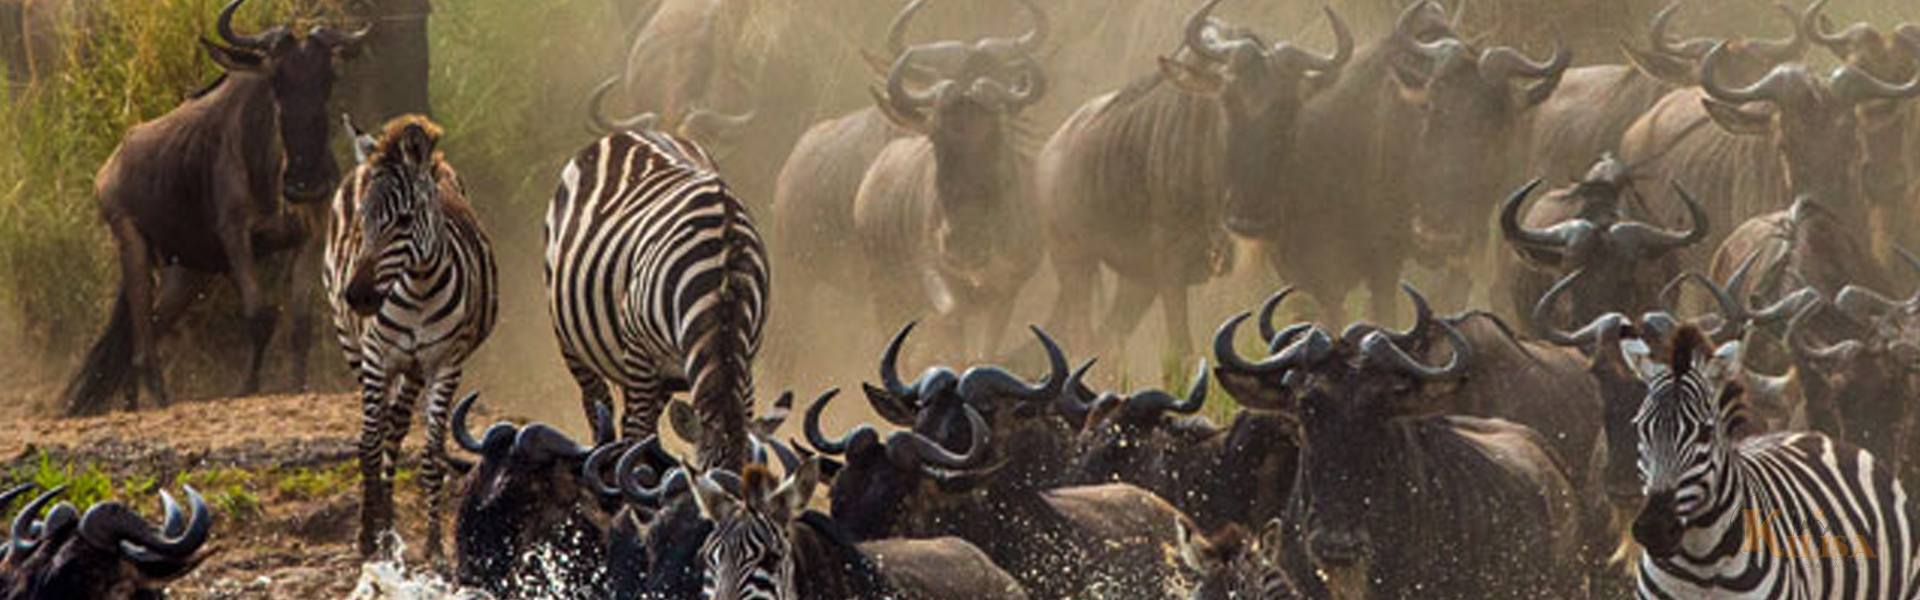 Serengeti wildebeest Migration Safari